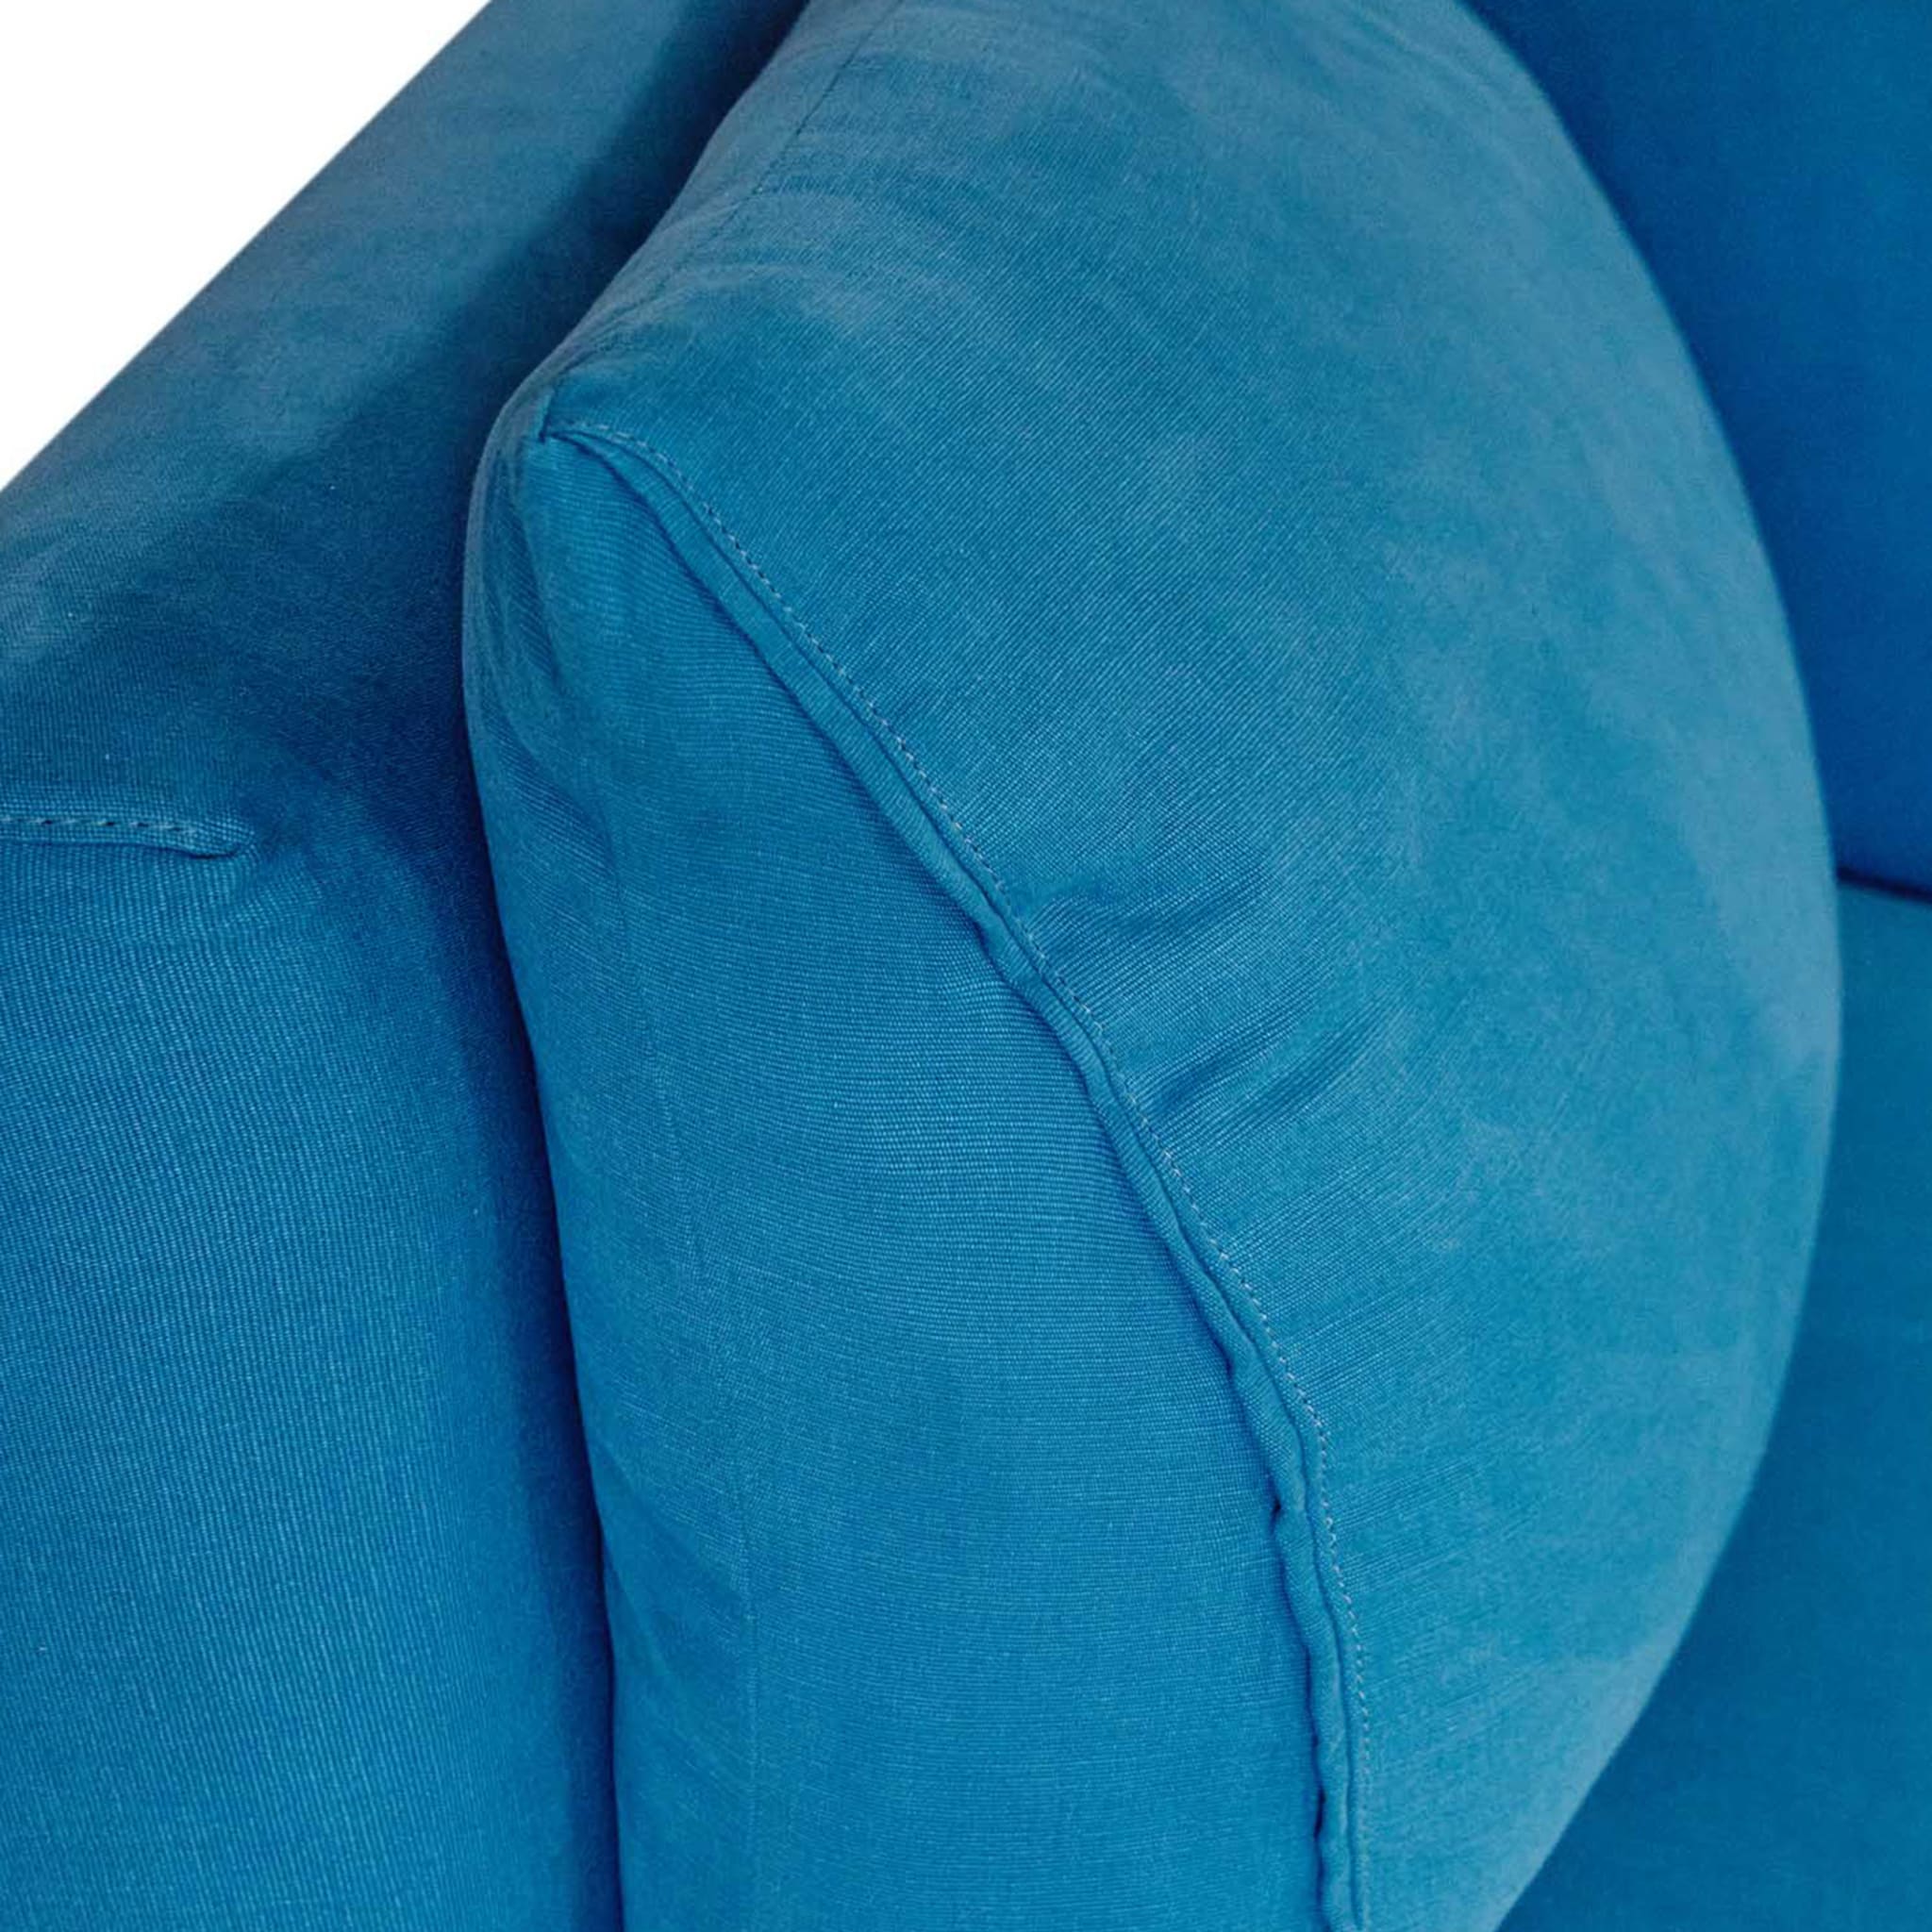 Casquet Mini in Peacock Blue Sofa - Alternative view 3